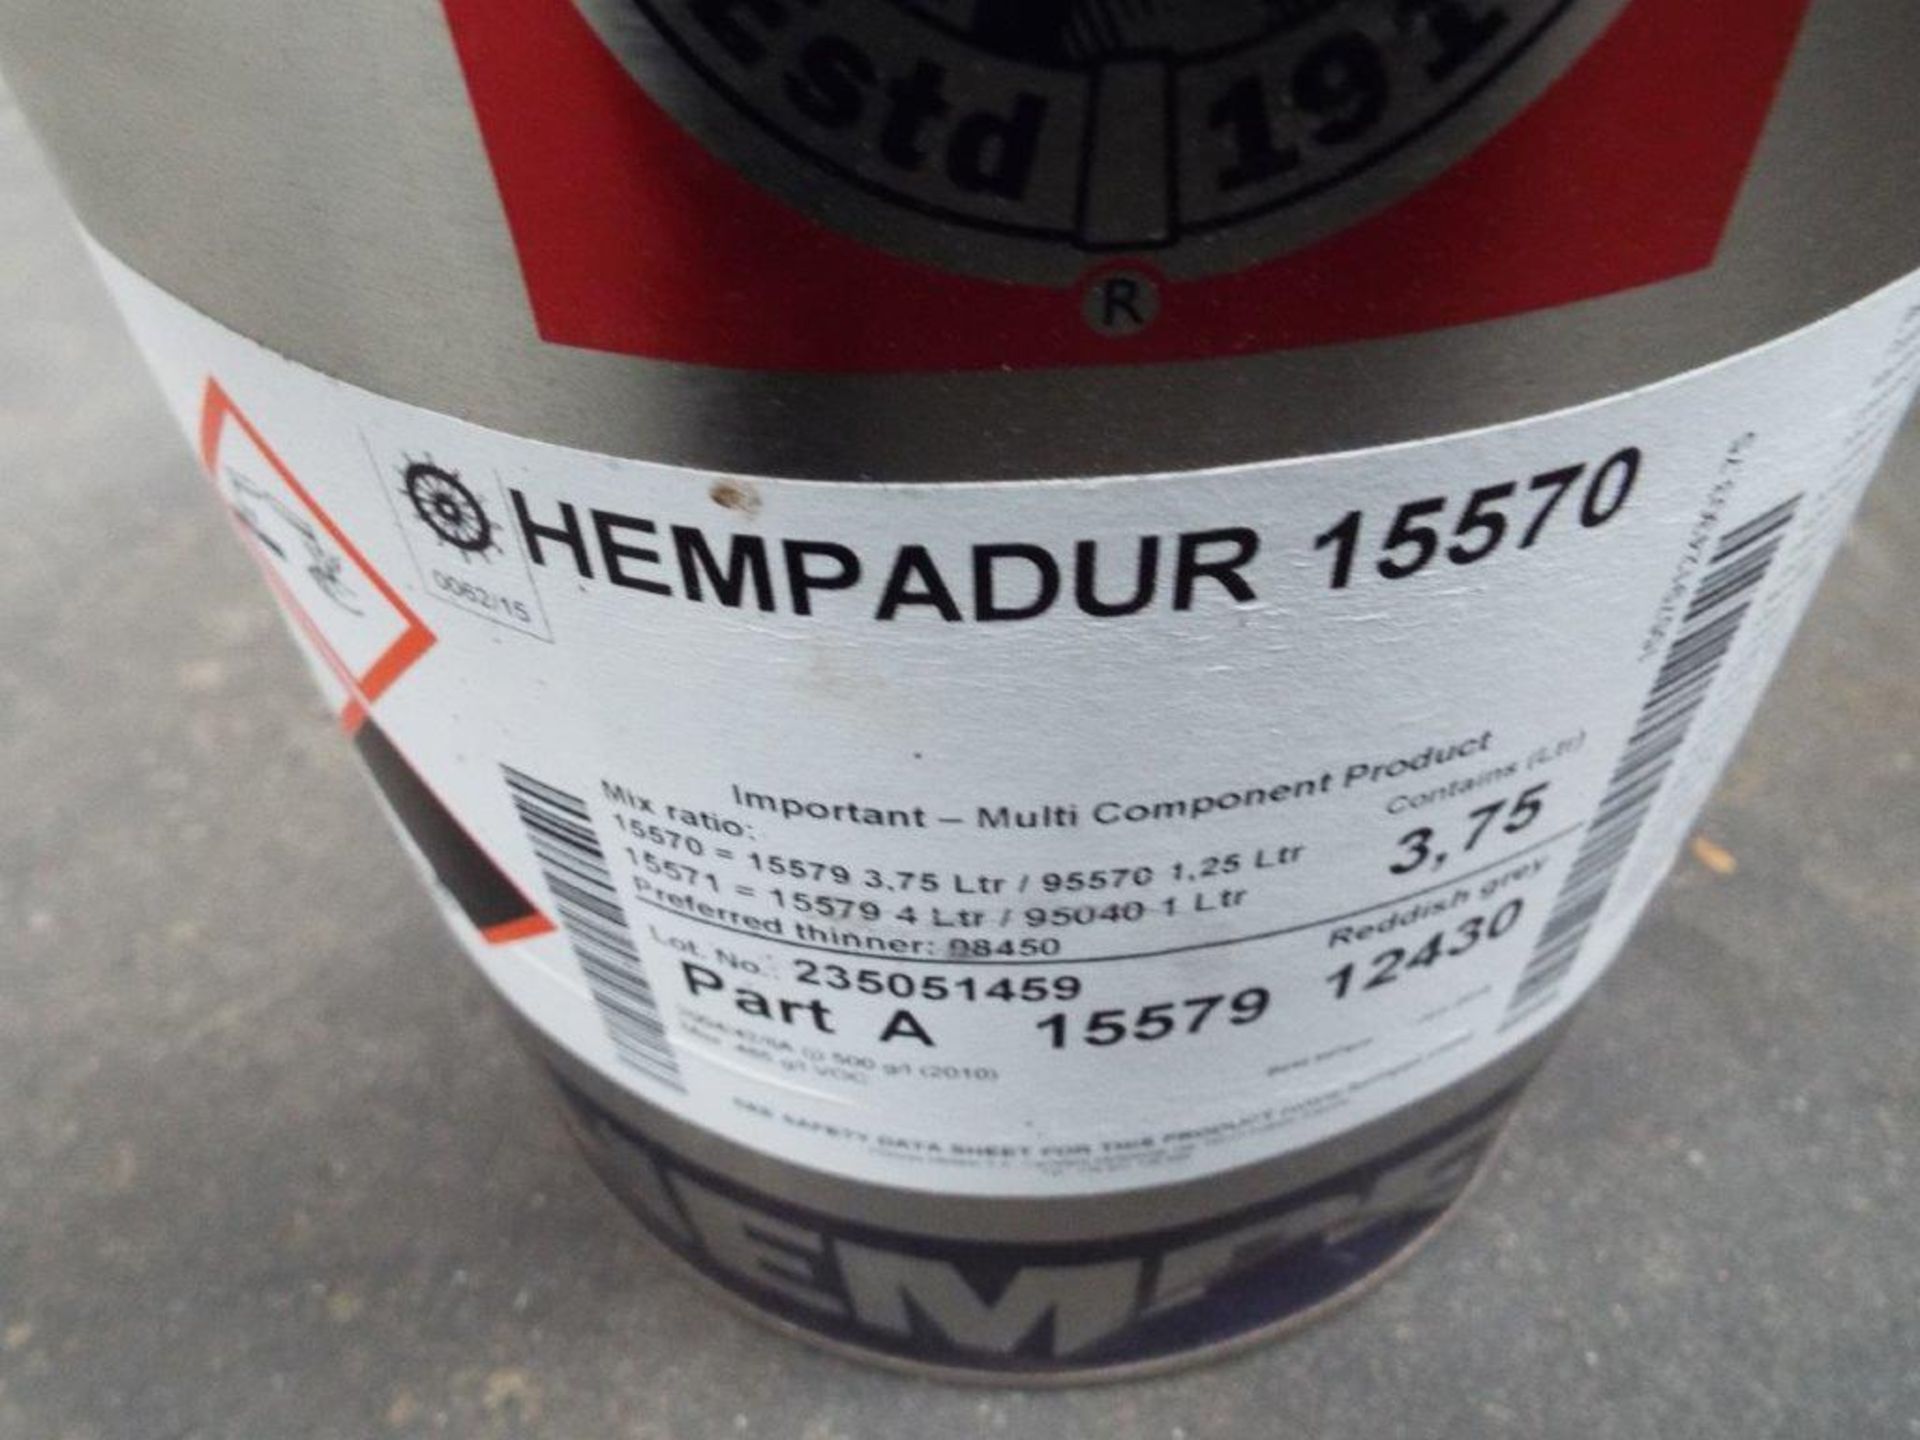 9 x 15/5L Cans of Hempel Hempadur 15570 2-Part Epoxy Paint - Red + 1 x 3.75/1.25L Reddish Grey - Image 5 of 7